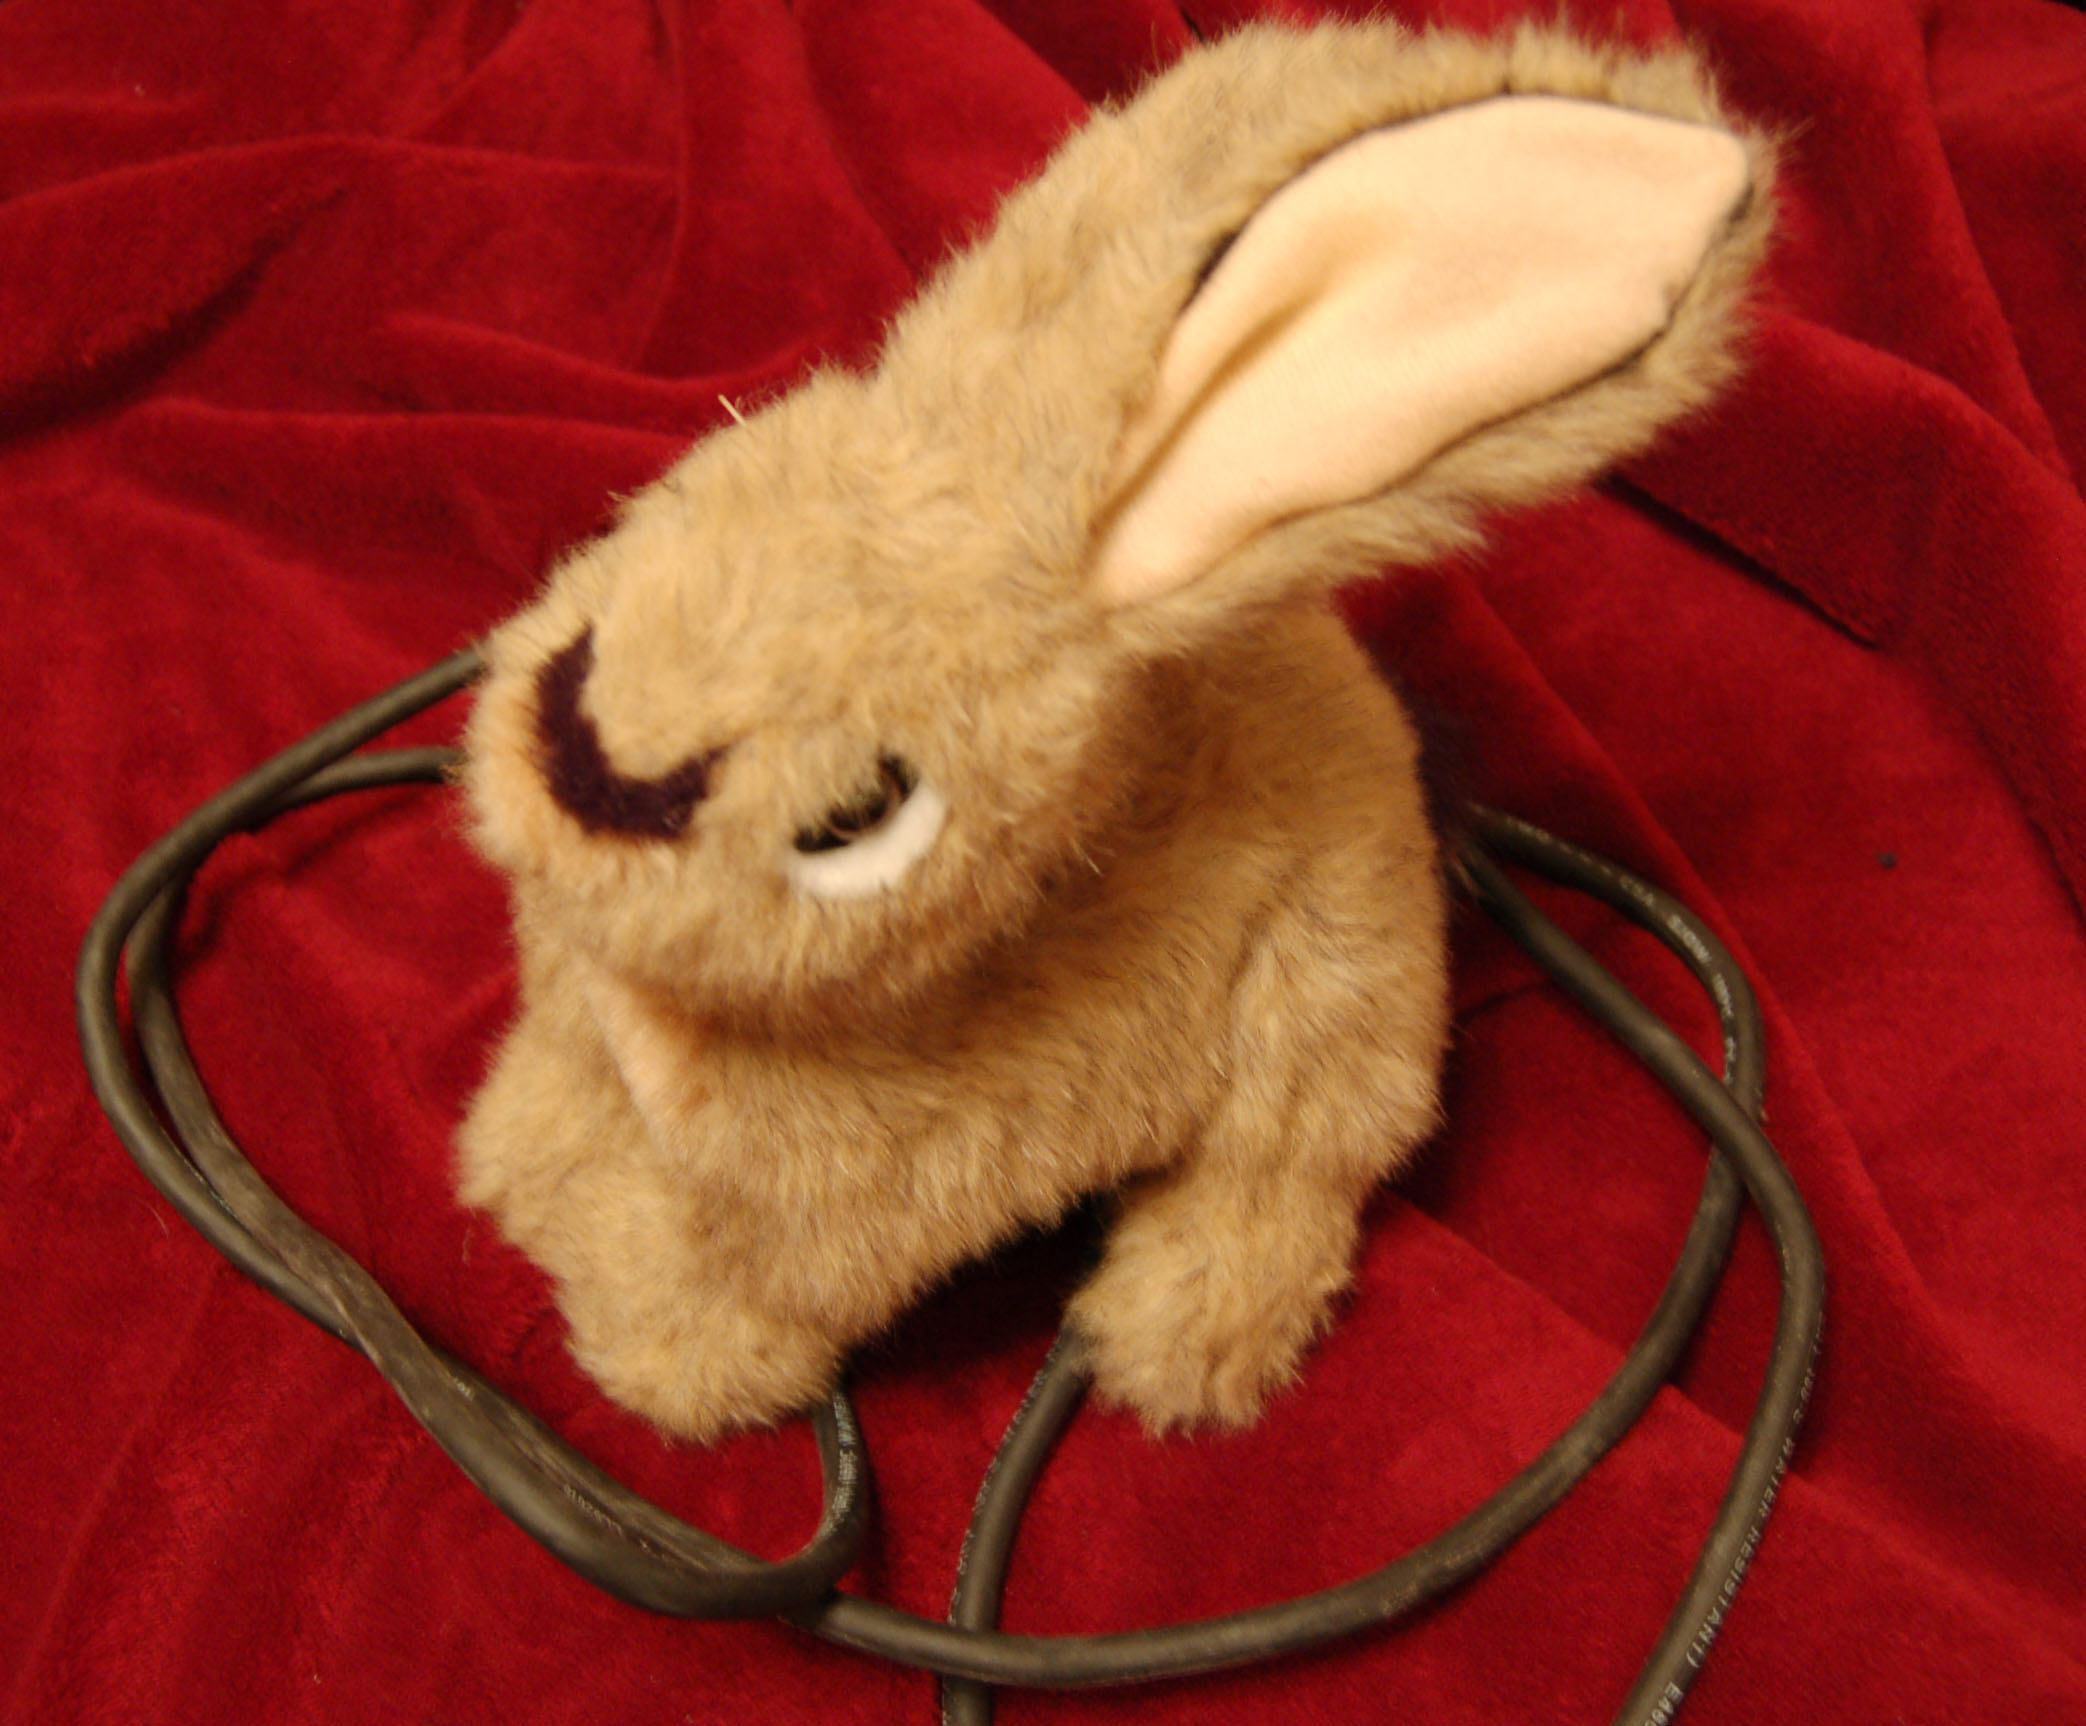 Impulse jack rabbit vibrator